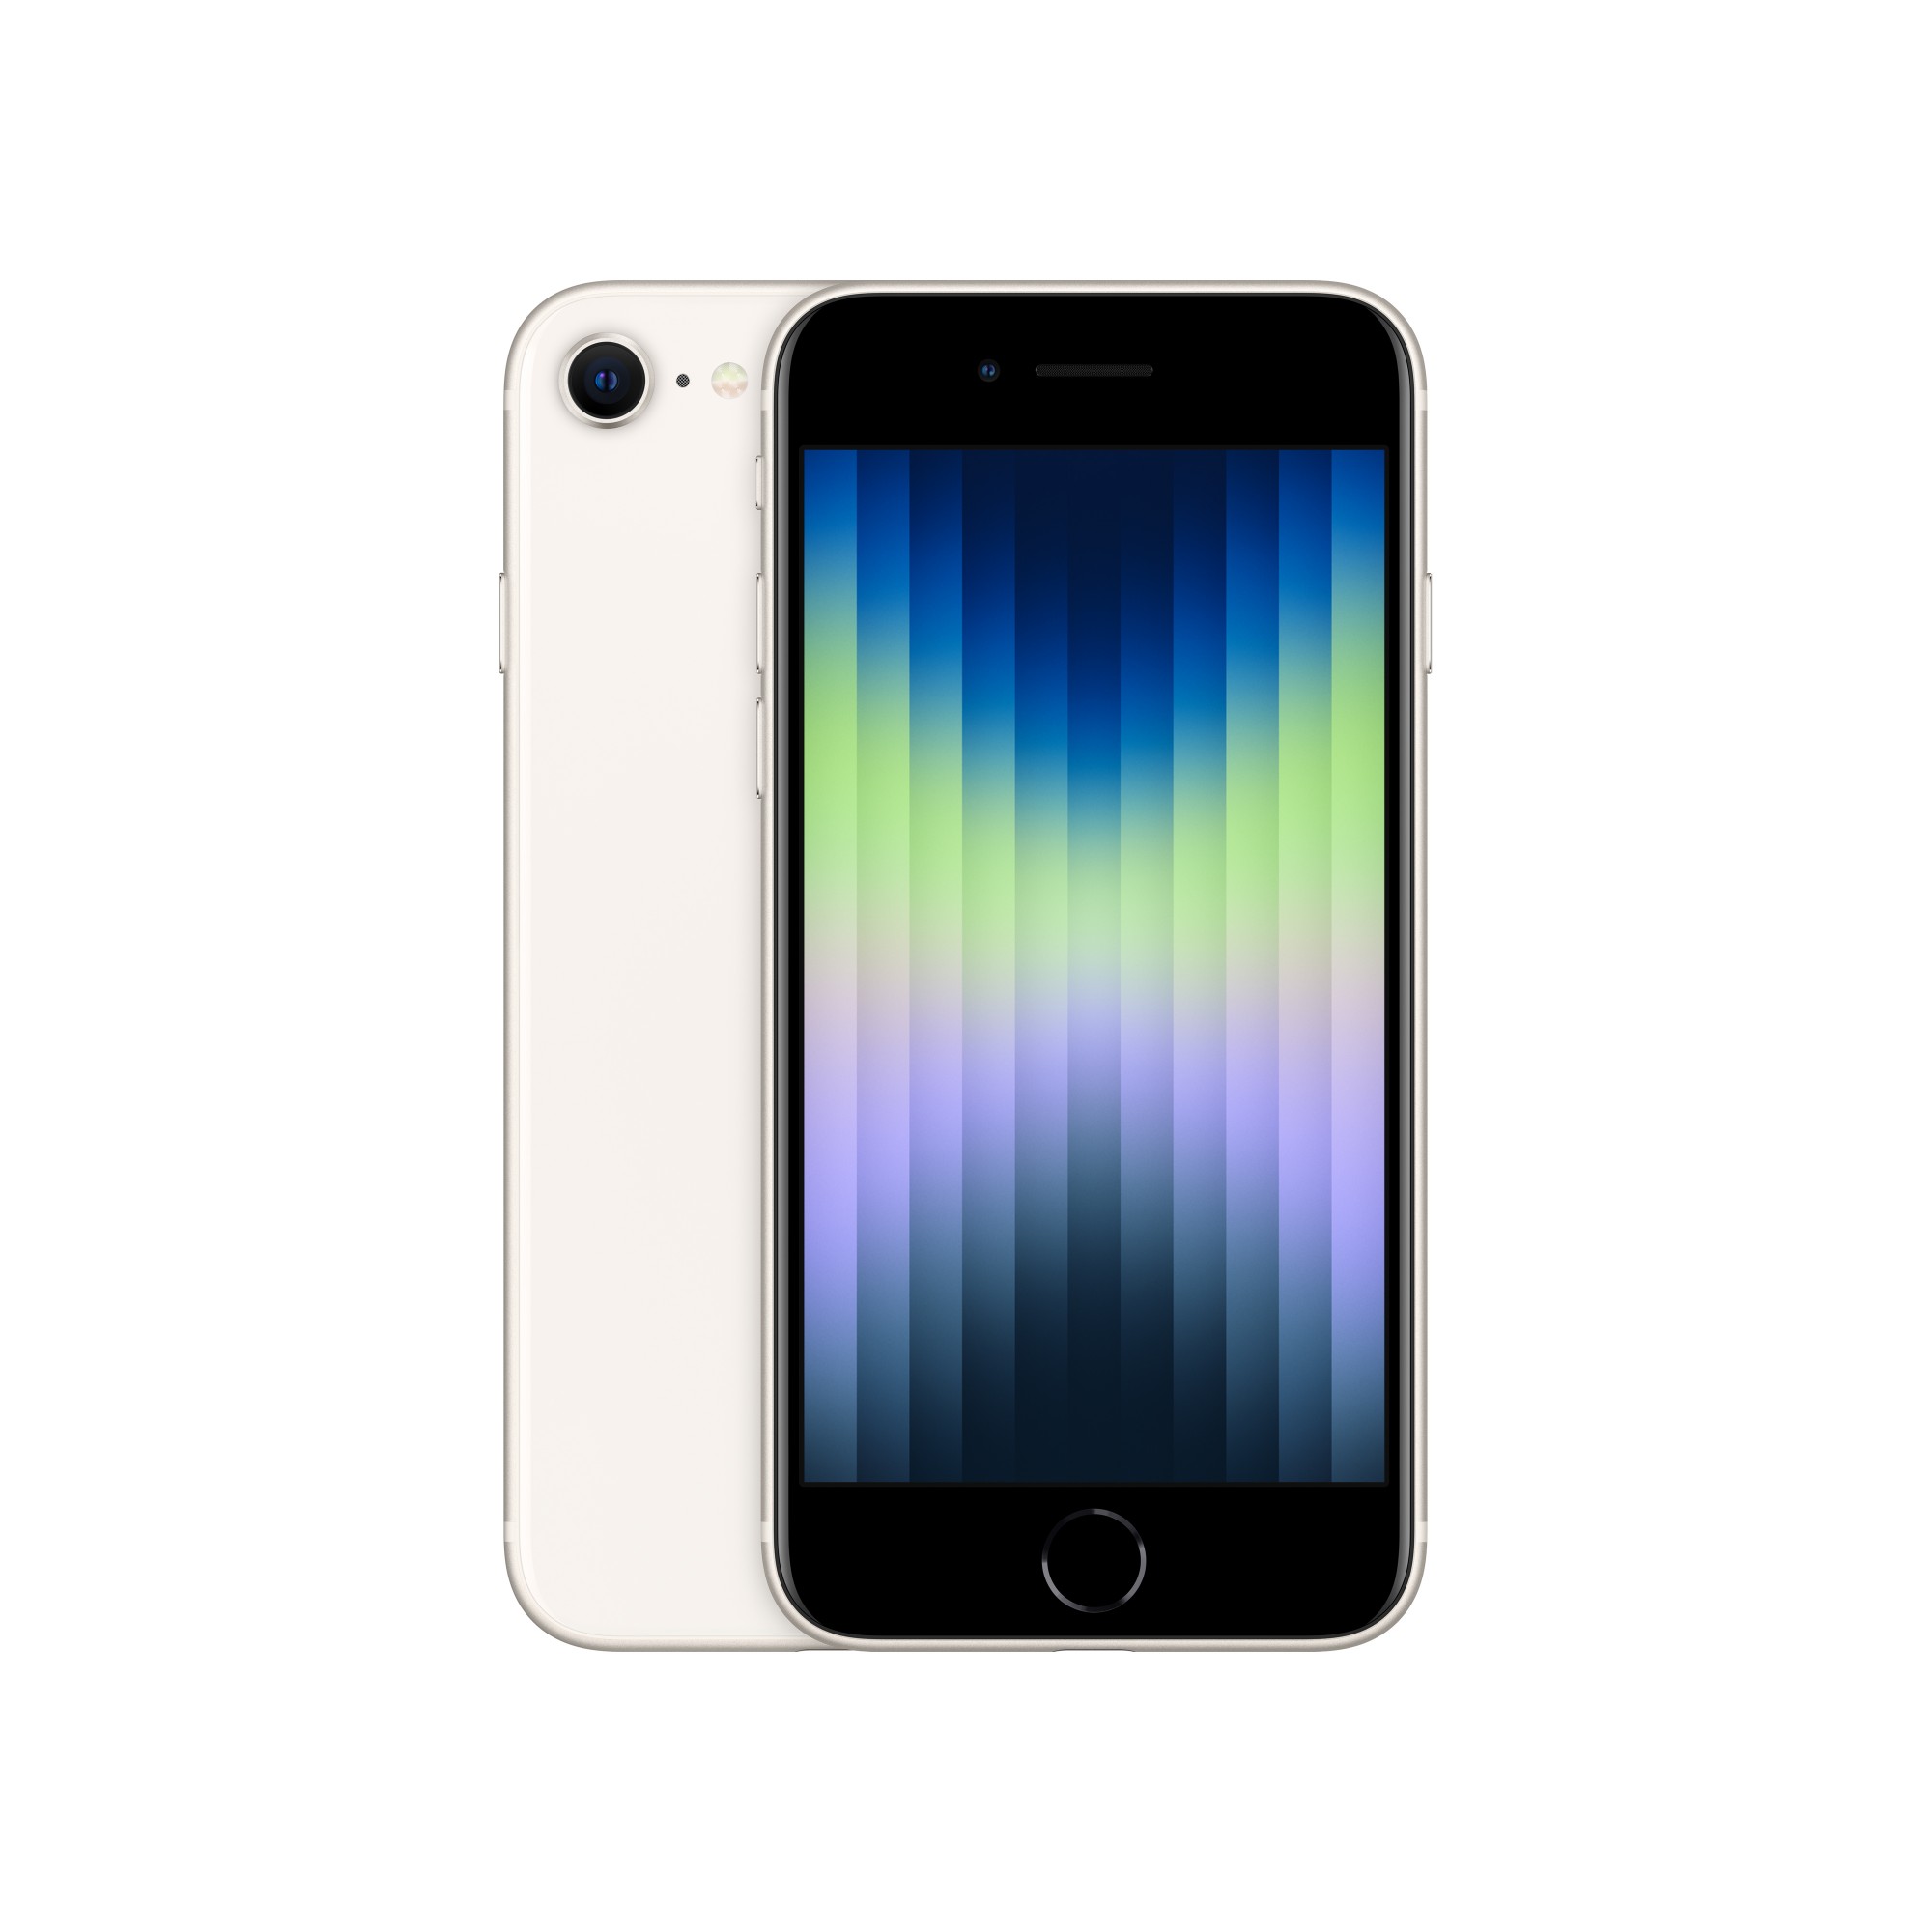 iPhone SE, 4.7" LCD, 1334 x 750, 326ppi, 128GB, A15 Bionic, LTE, 802.11ax, Bluetooth 5.0, NFC, 12MP + 7MP, IP67, iOS 15